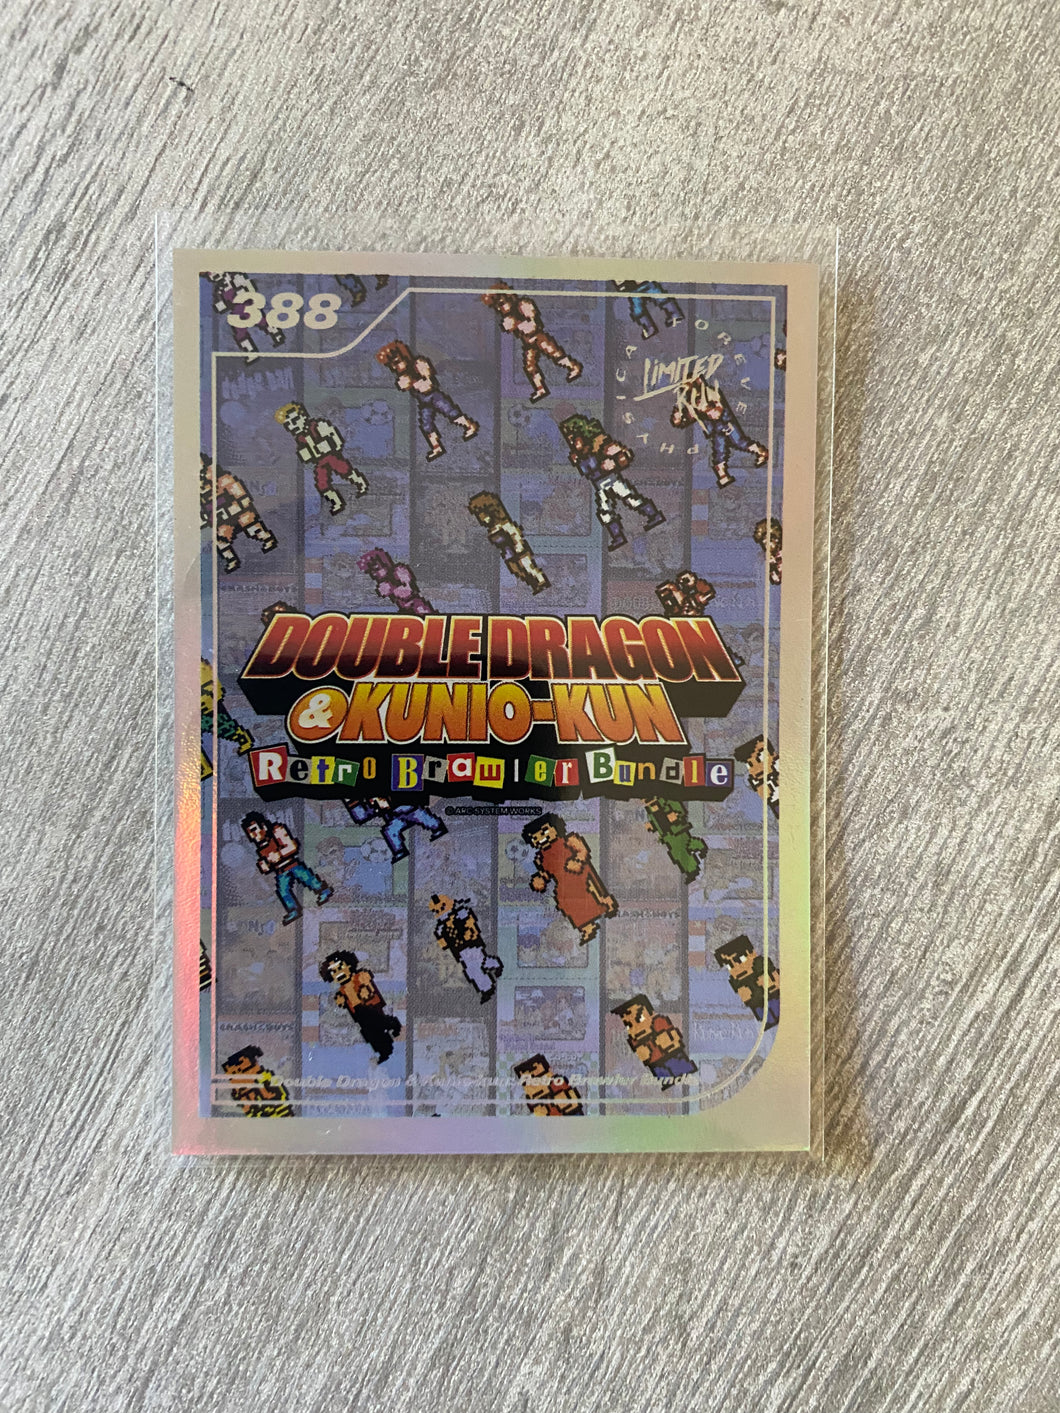 Gen2 #388 Silver Double dragon & Kunio-kun Limited run games Trading card